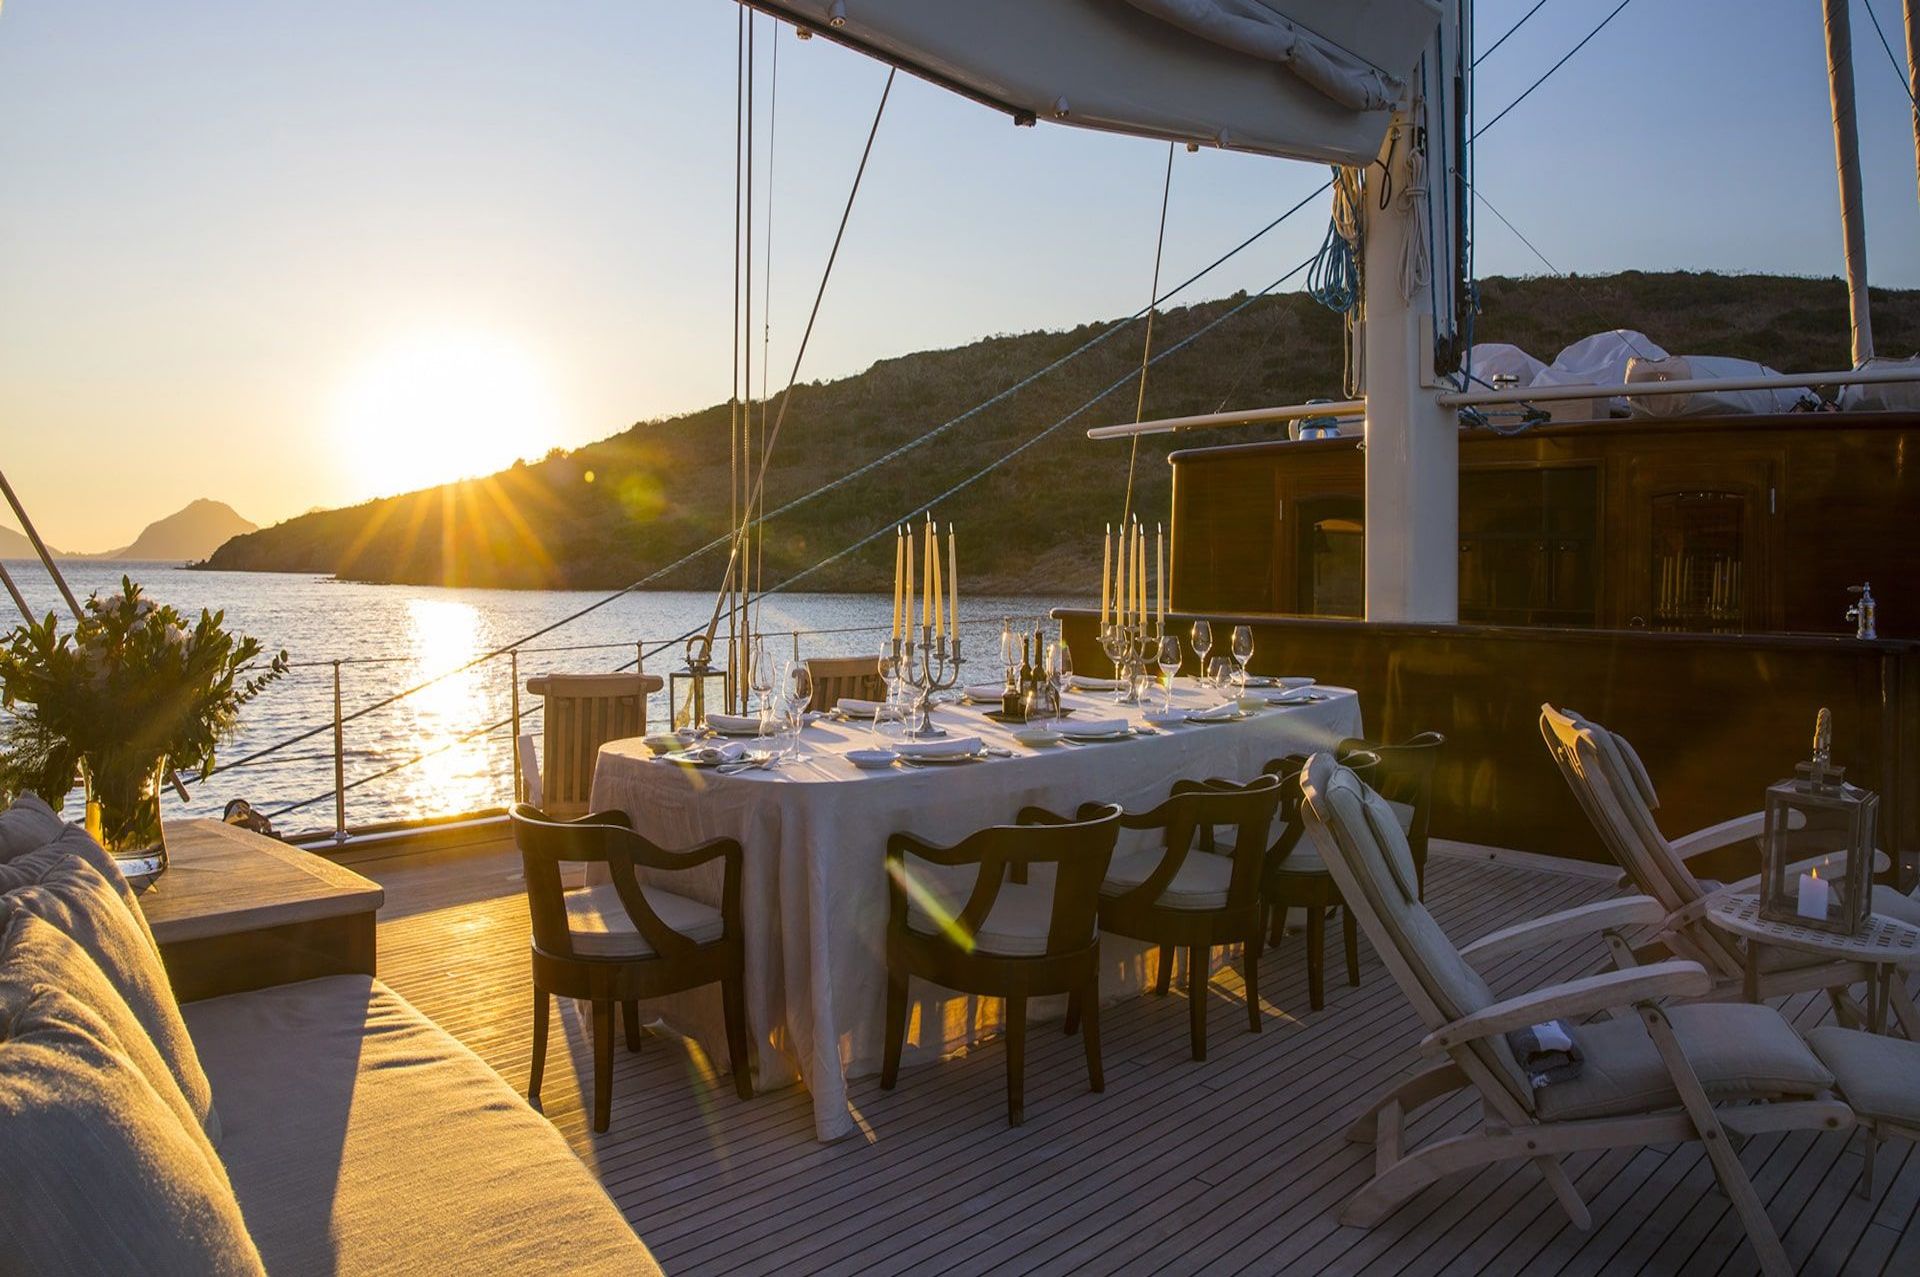 Satori yacht charter dining